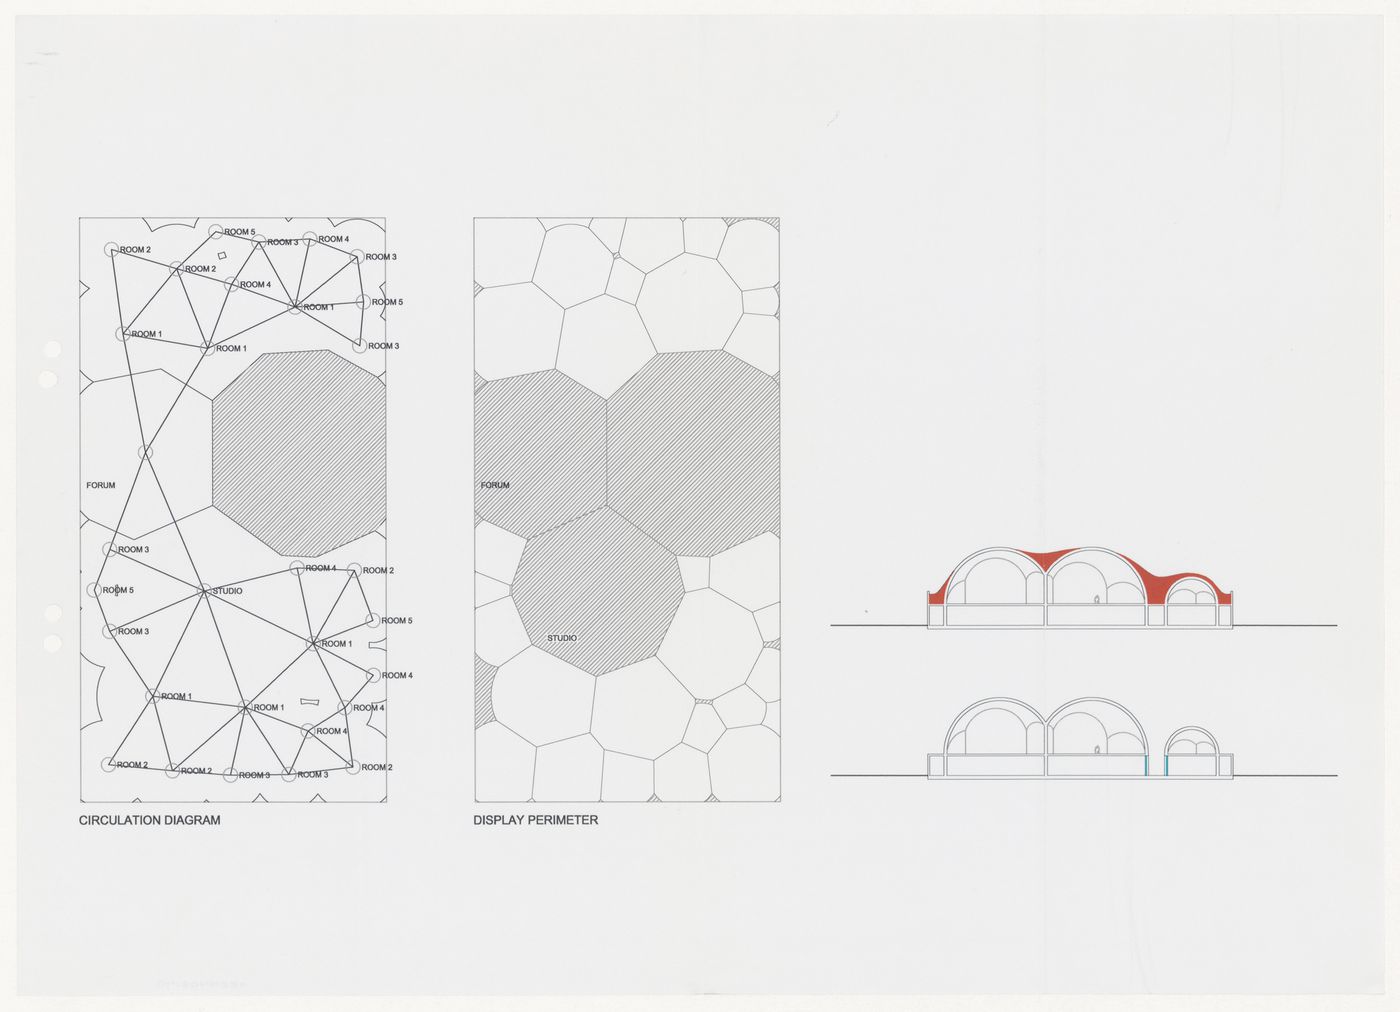 Circulation diagram and display perimeter for Centre Pompidou-Metz, Metz, France